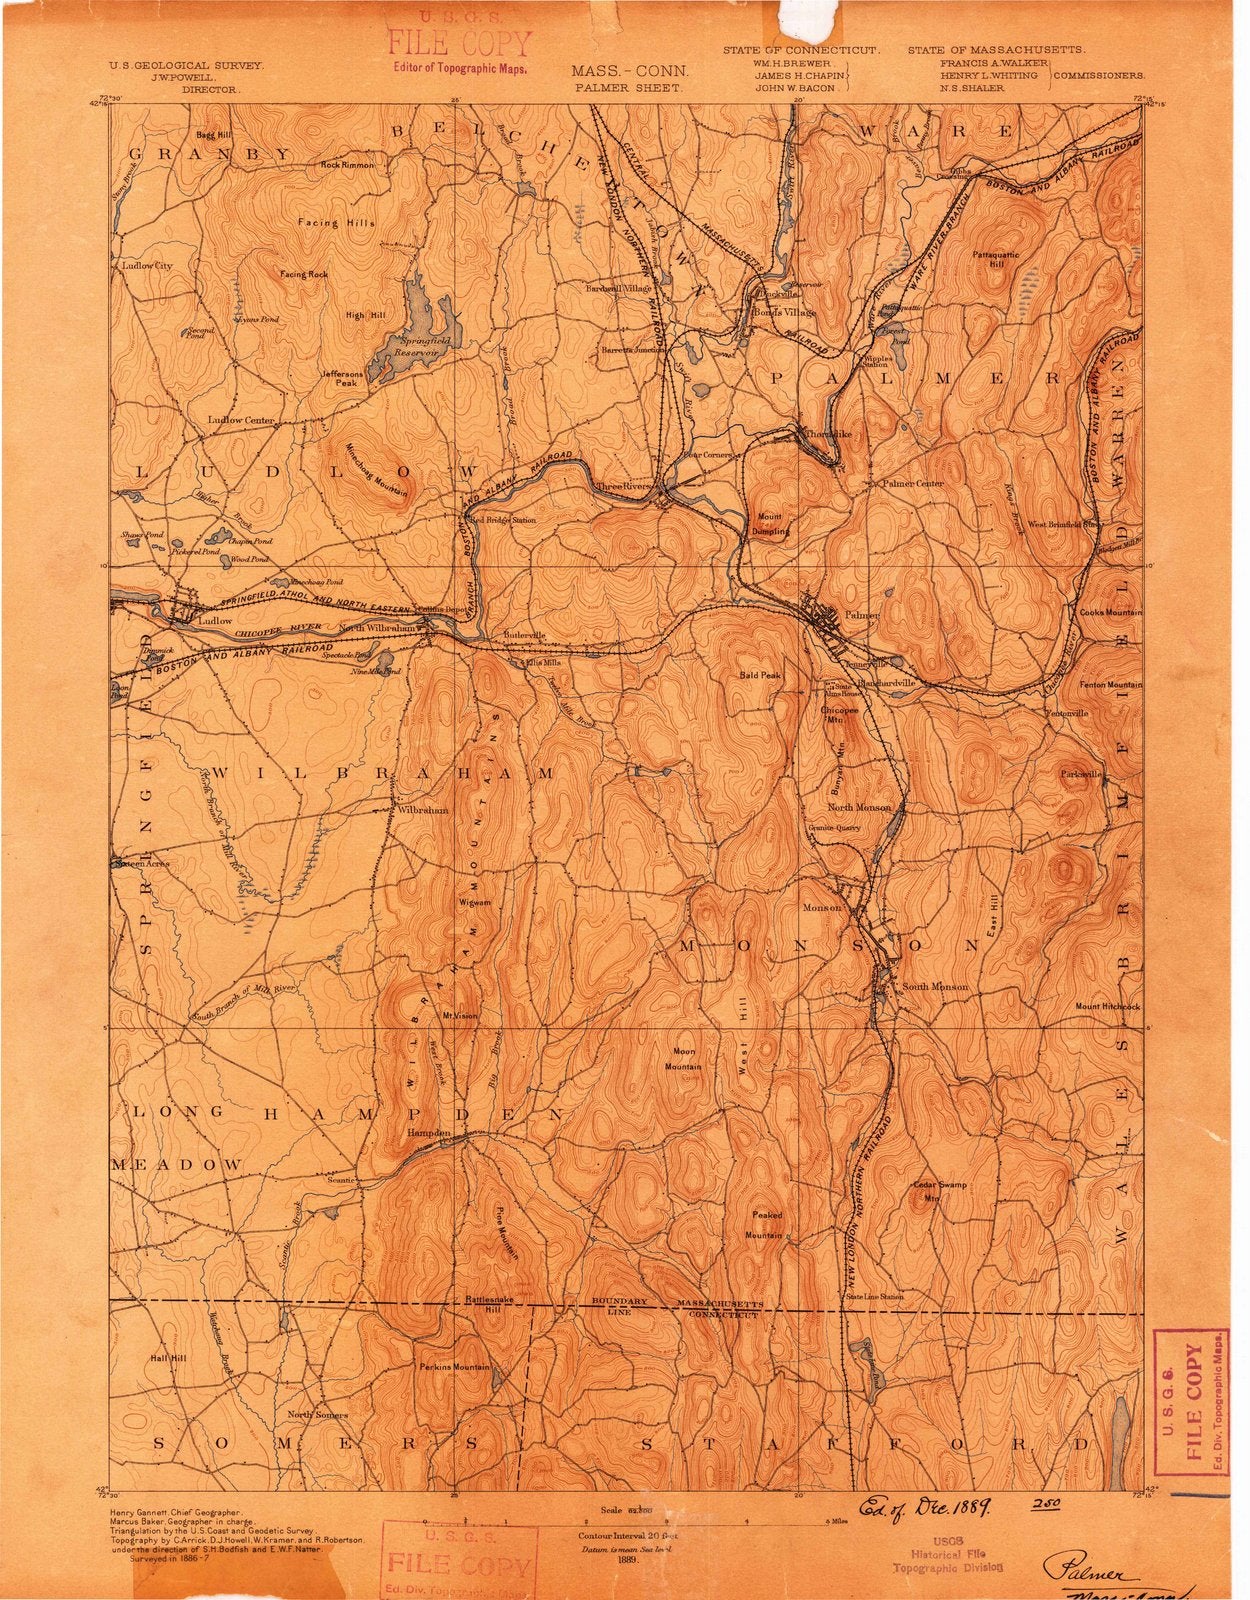 1889 Palmer, MA - Massachusetts - USGS Topographic Map